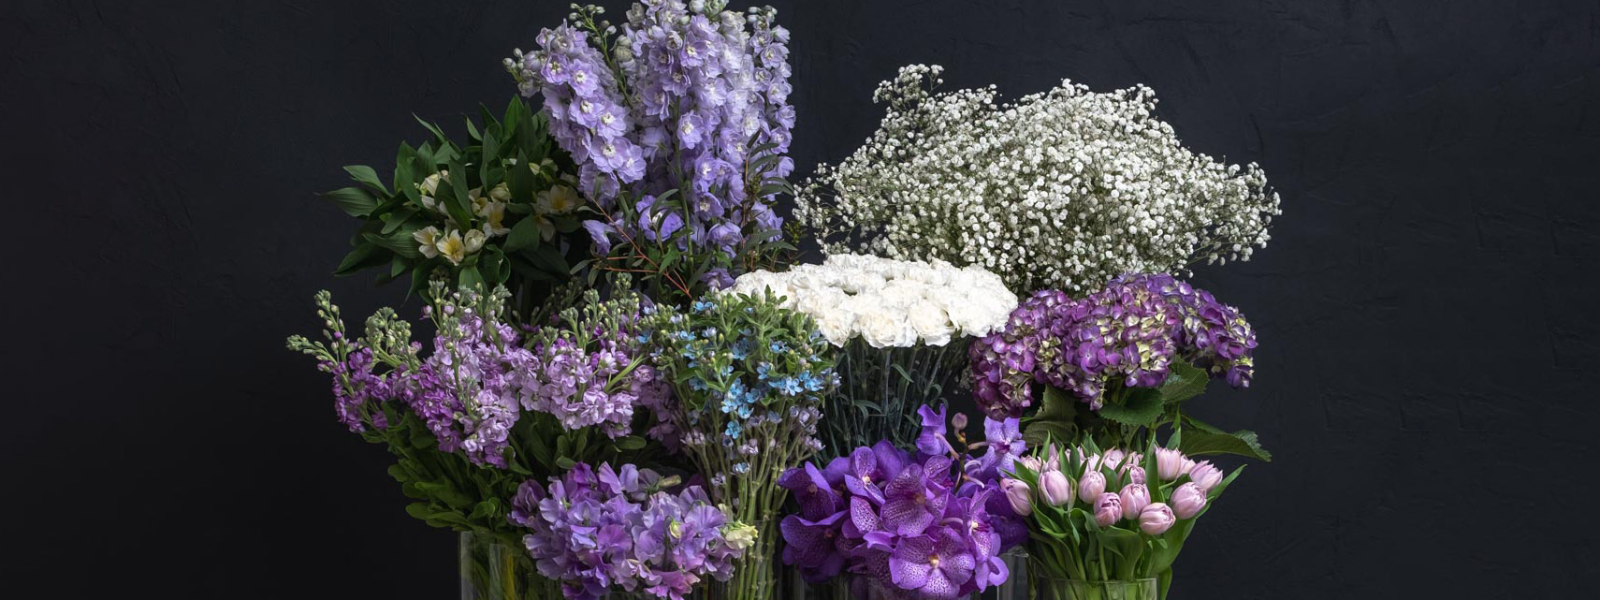 LILLEOAAS OÜ - pots and vases, e-shop, Events, flower bouquets, indoor plants, funeral arrangements and wreaths, Wedding ...